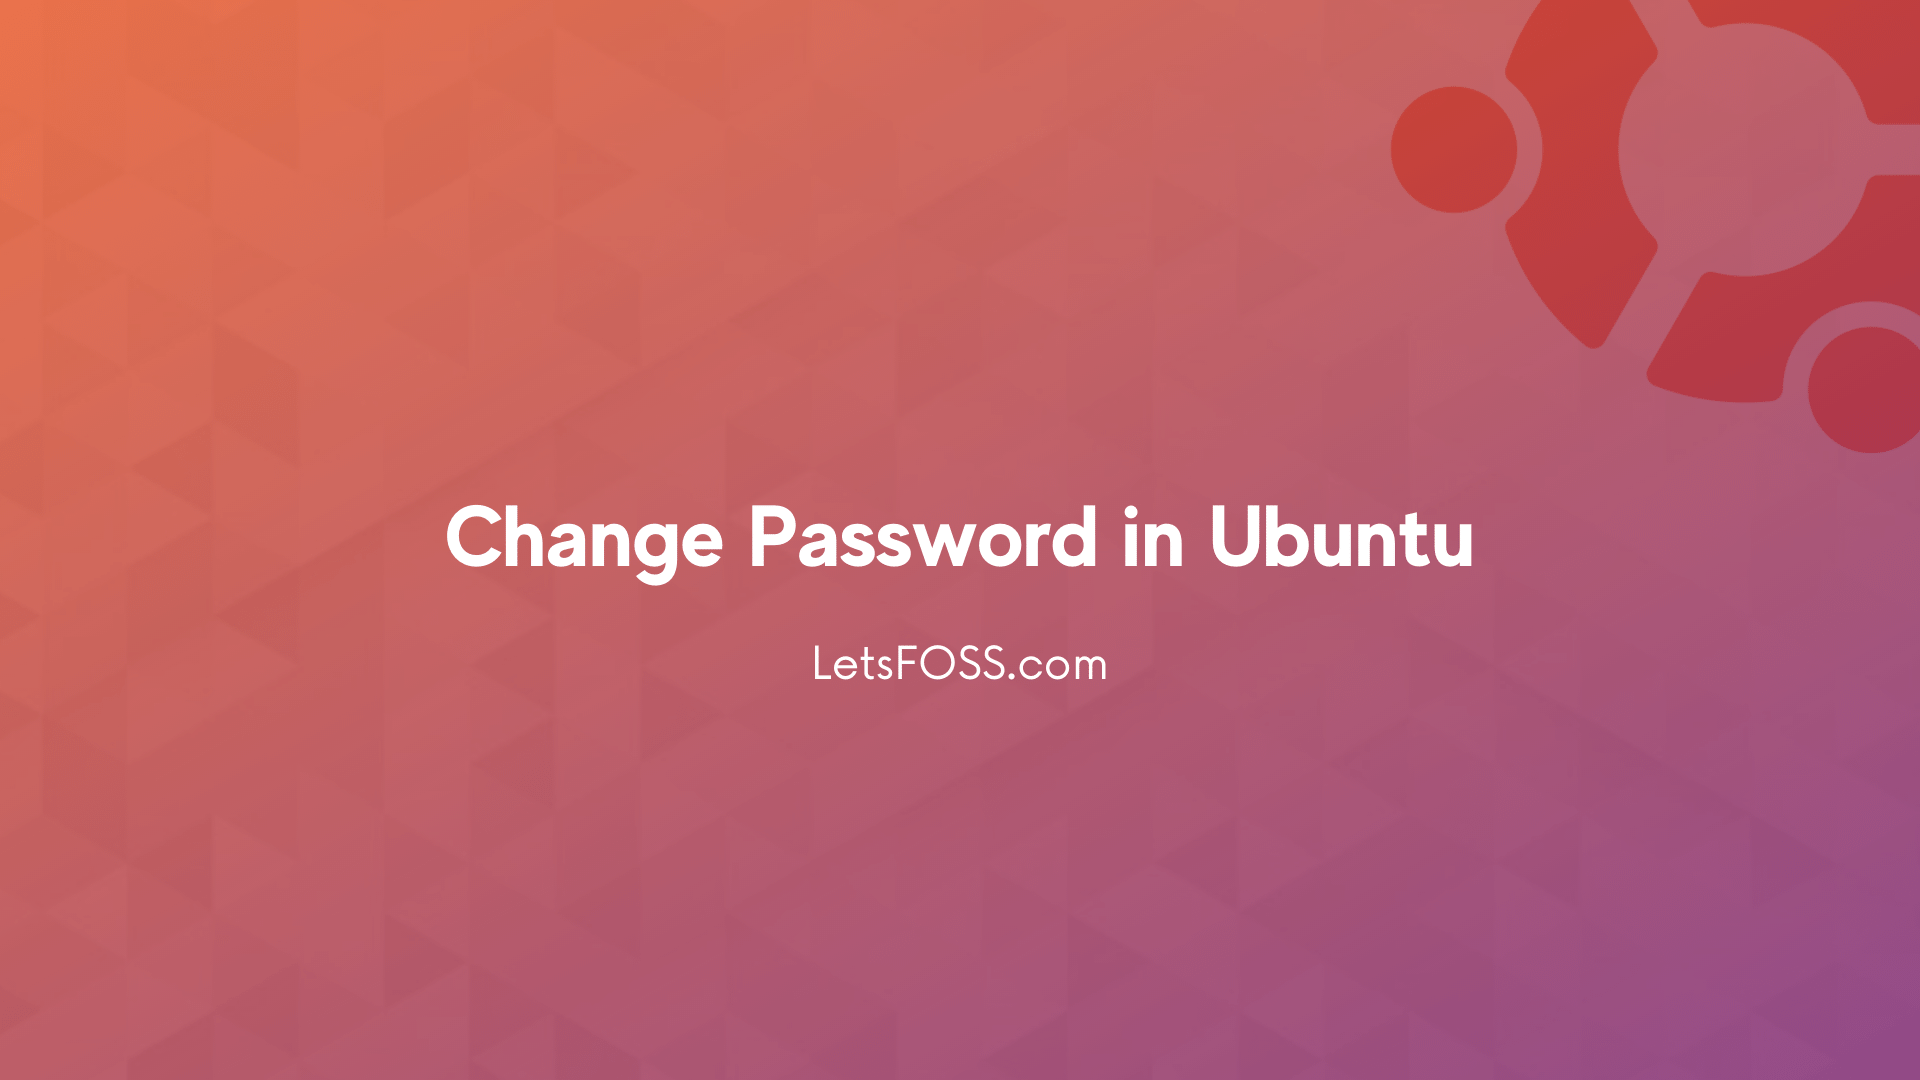 Changing Password in Ubuntu